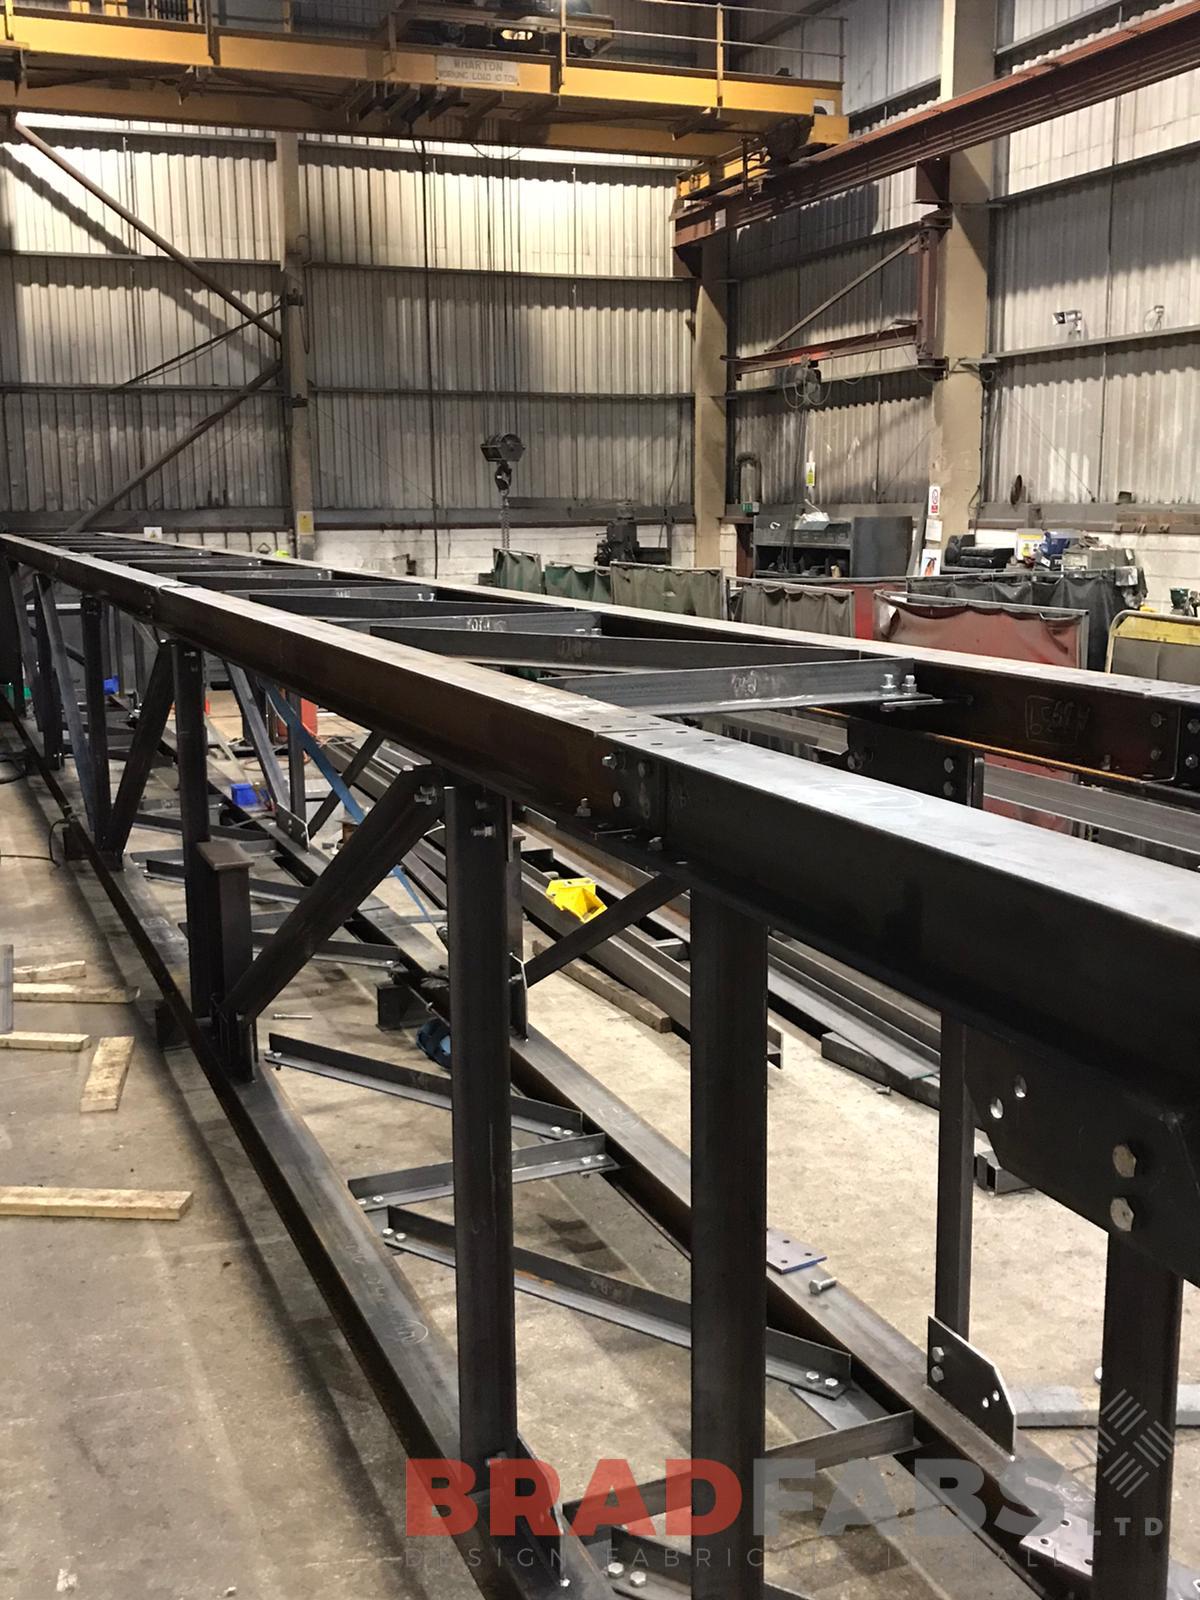 Bradfabs designed, fabricated and installed mild steel, galvanised bespoke pipe bridge